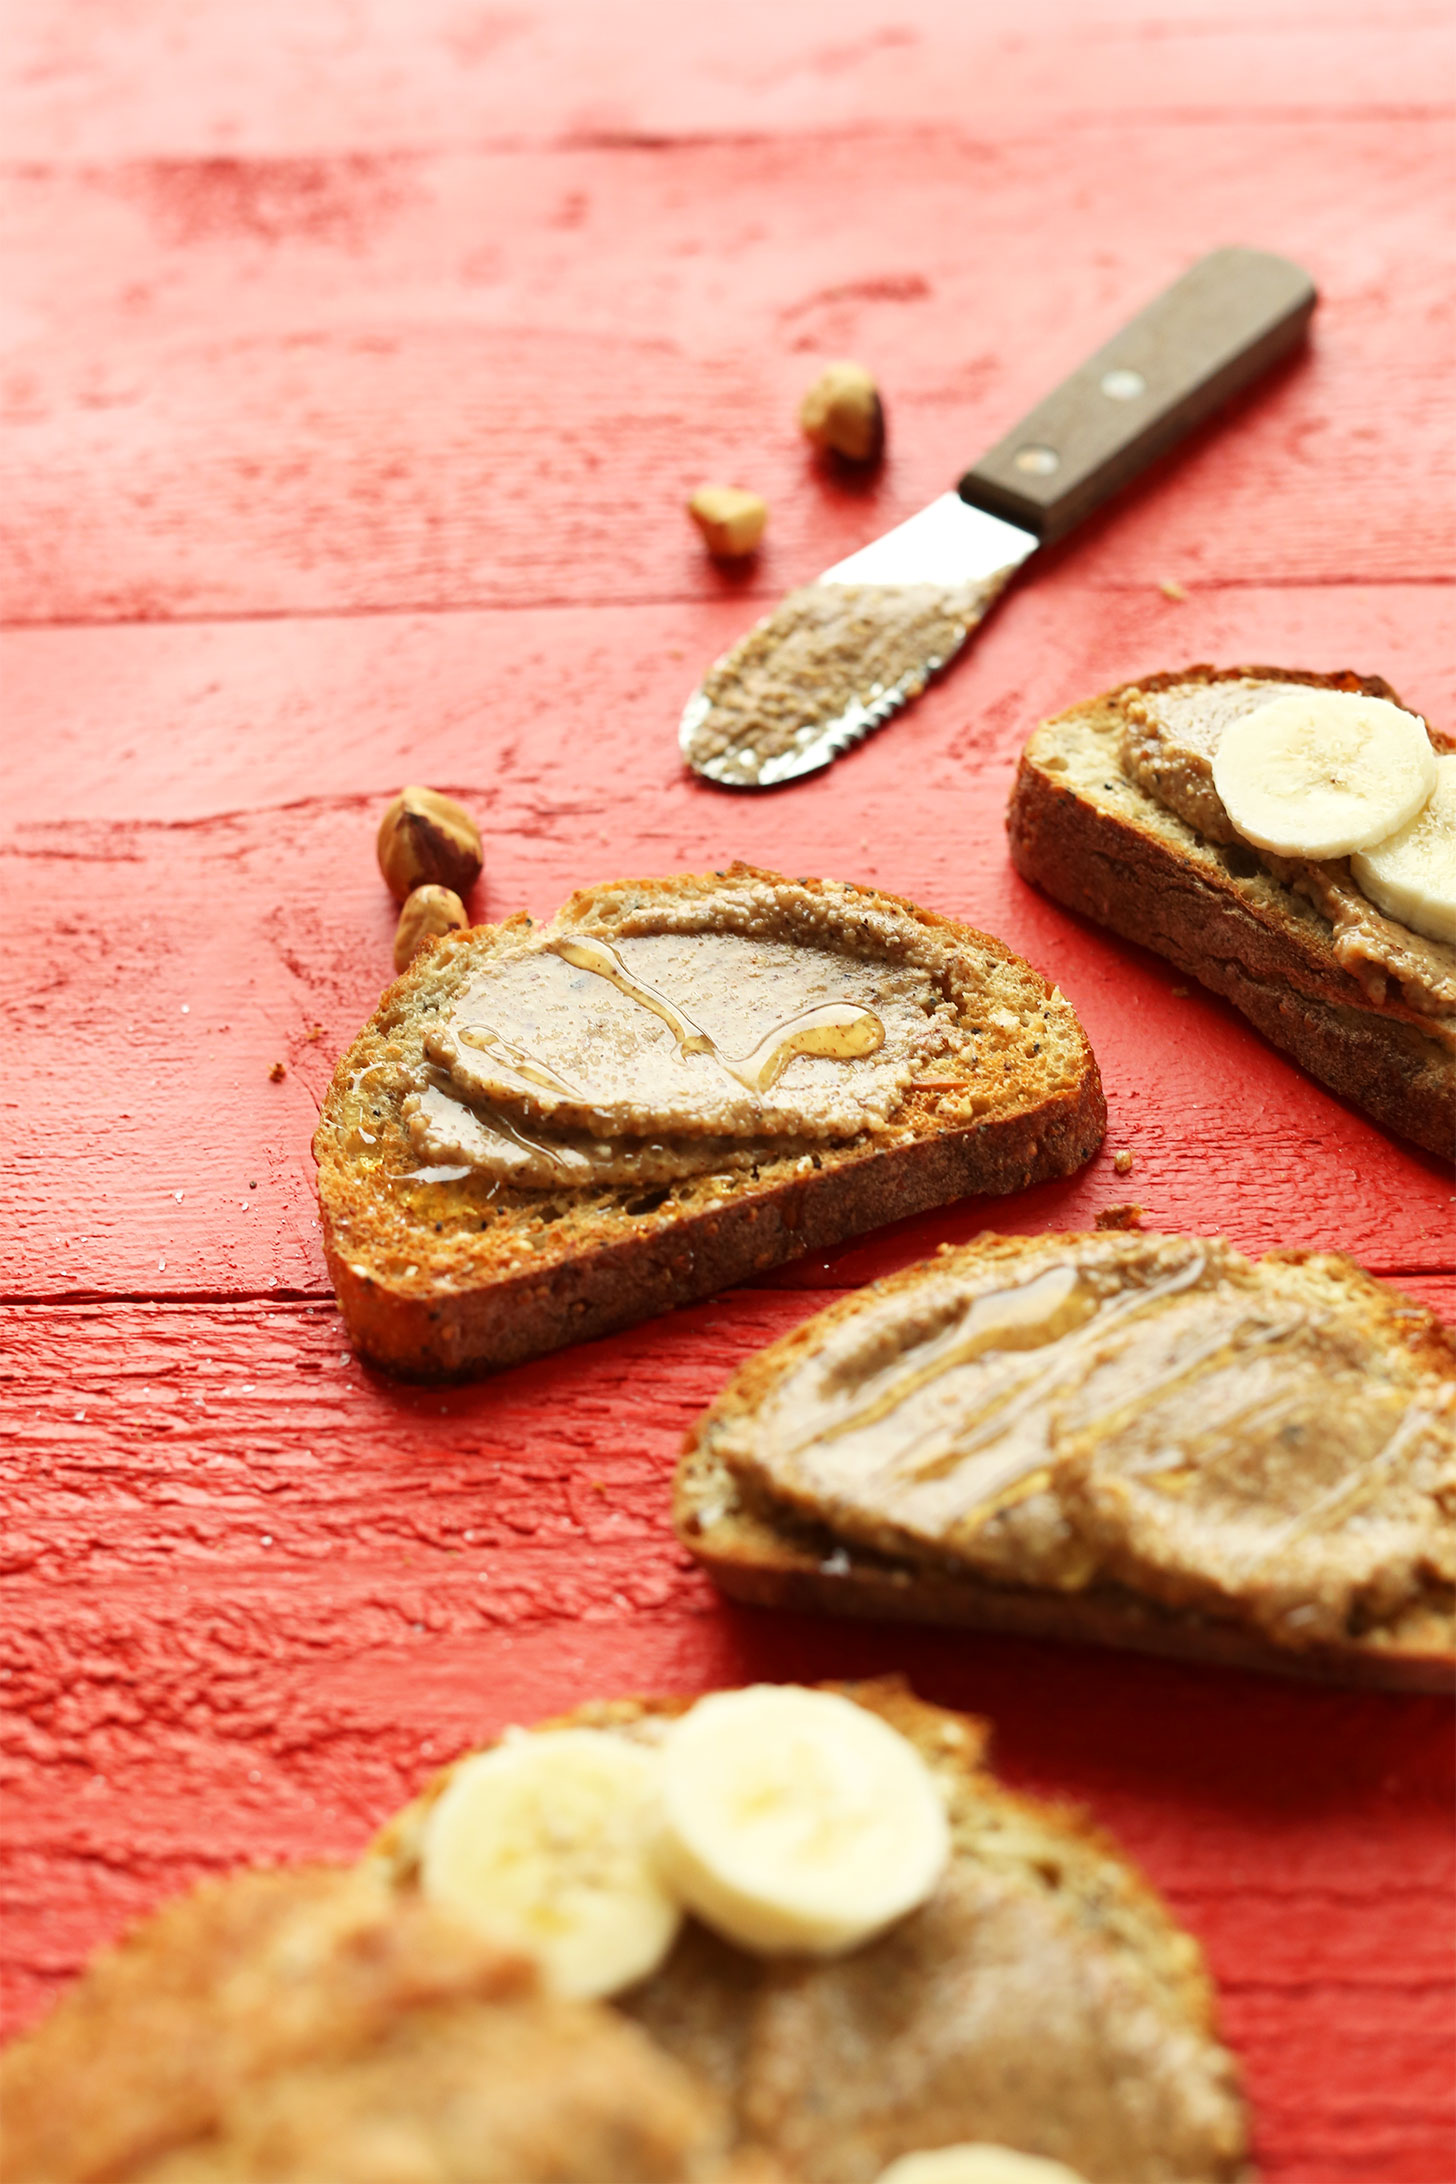 Spreading Cinnamon Hazelnut Butter onto gluten-free toast for a delicious vegan snack